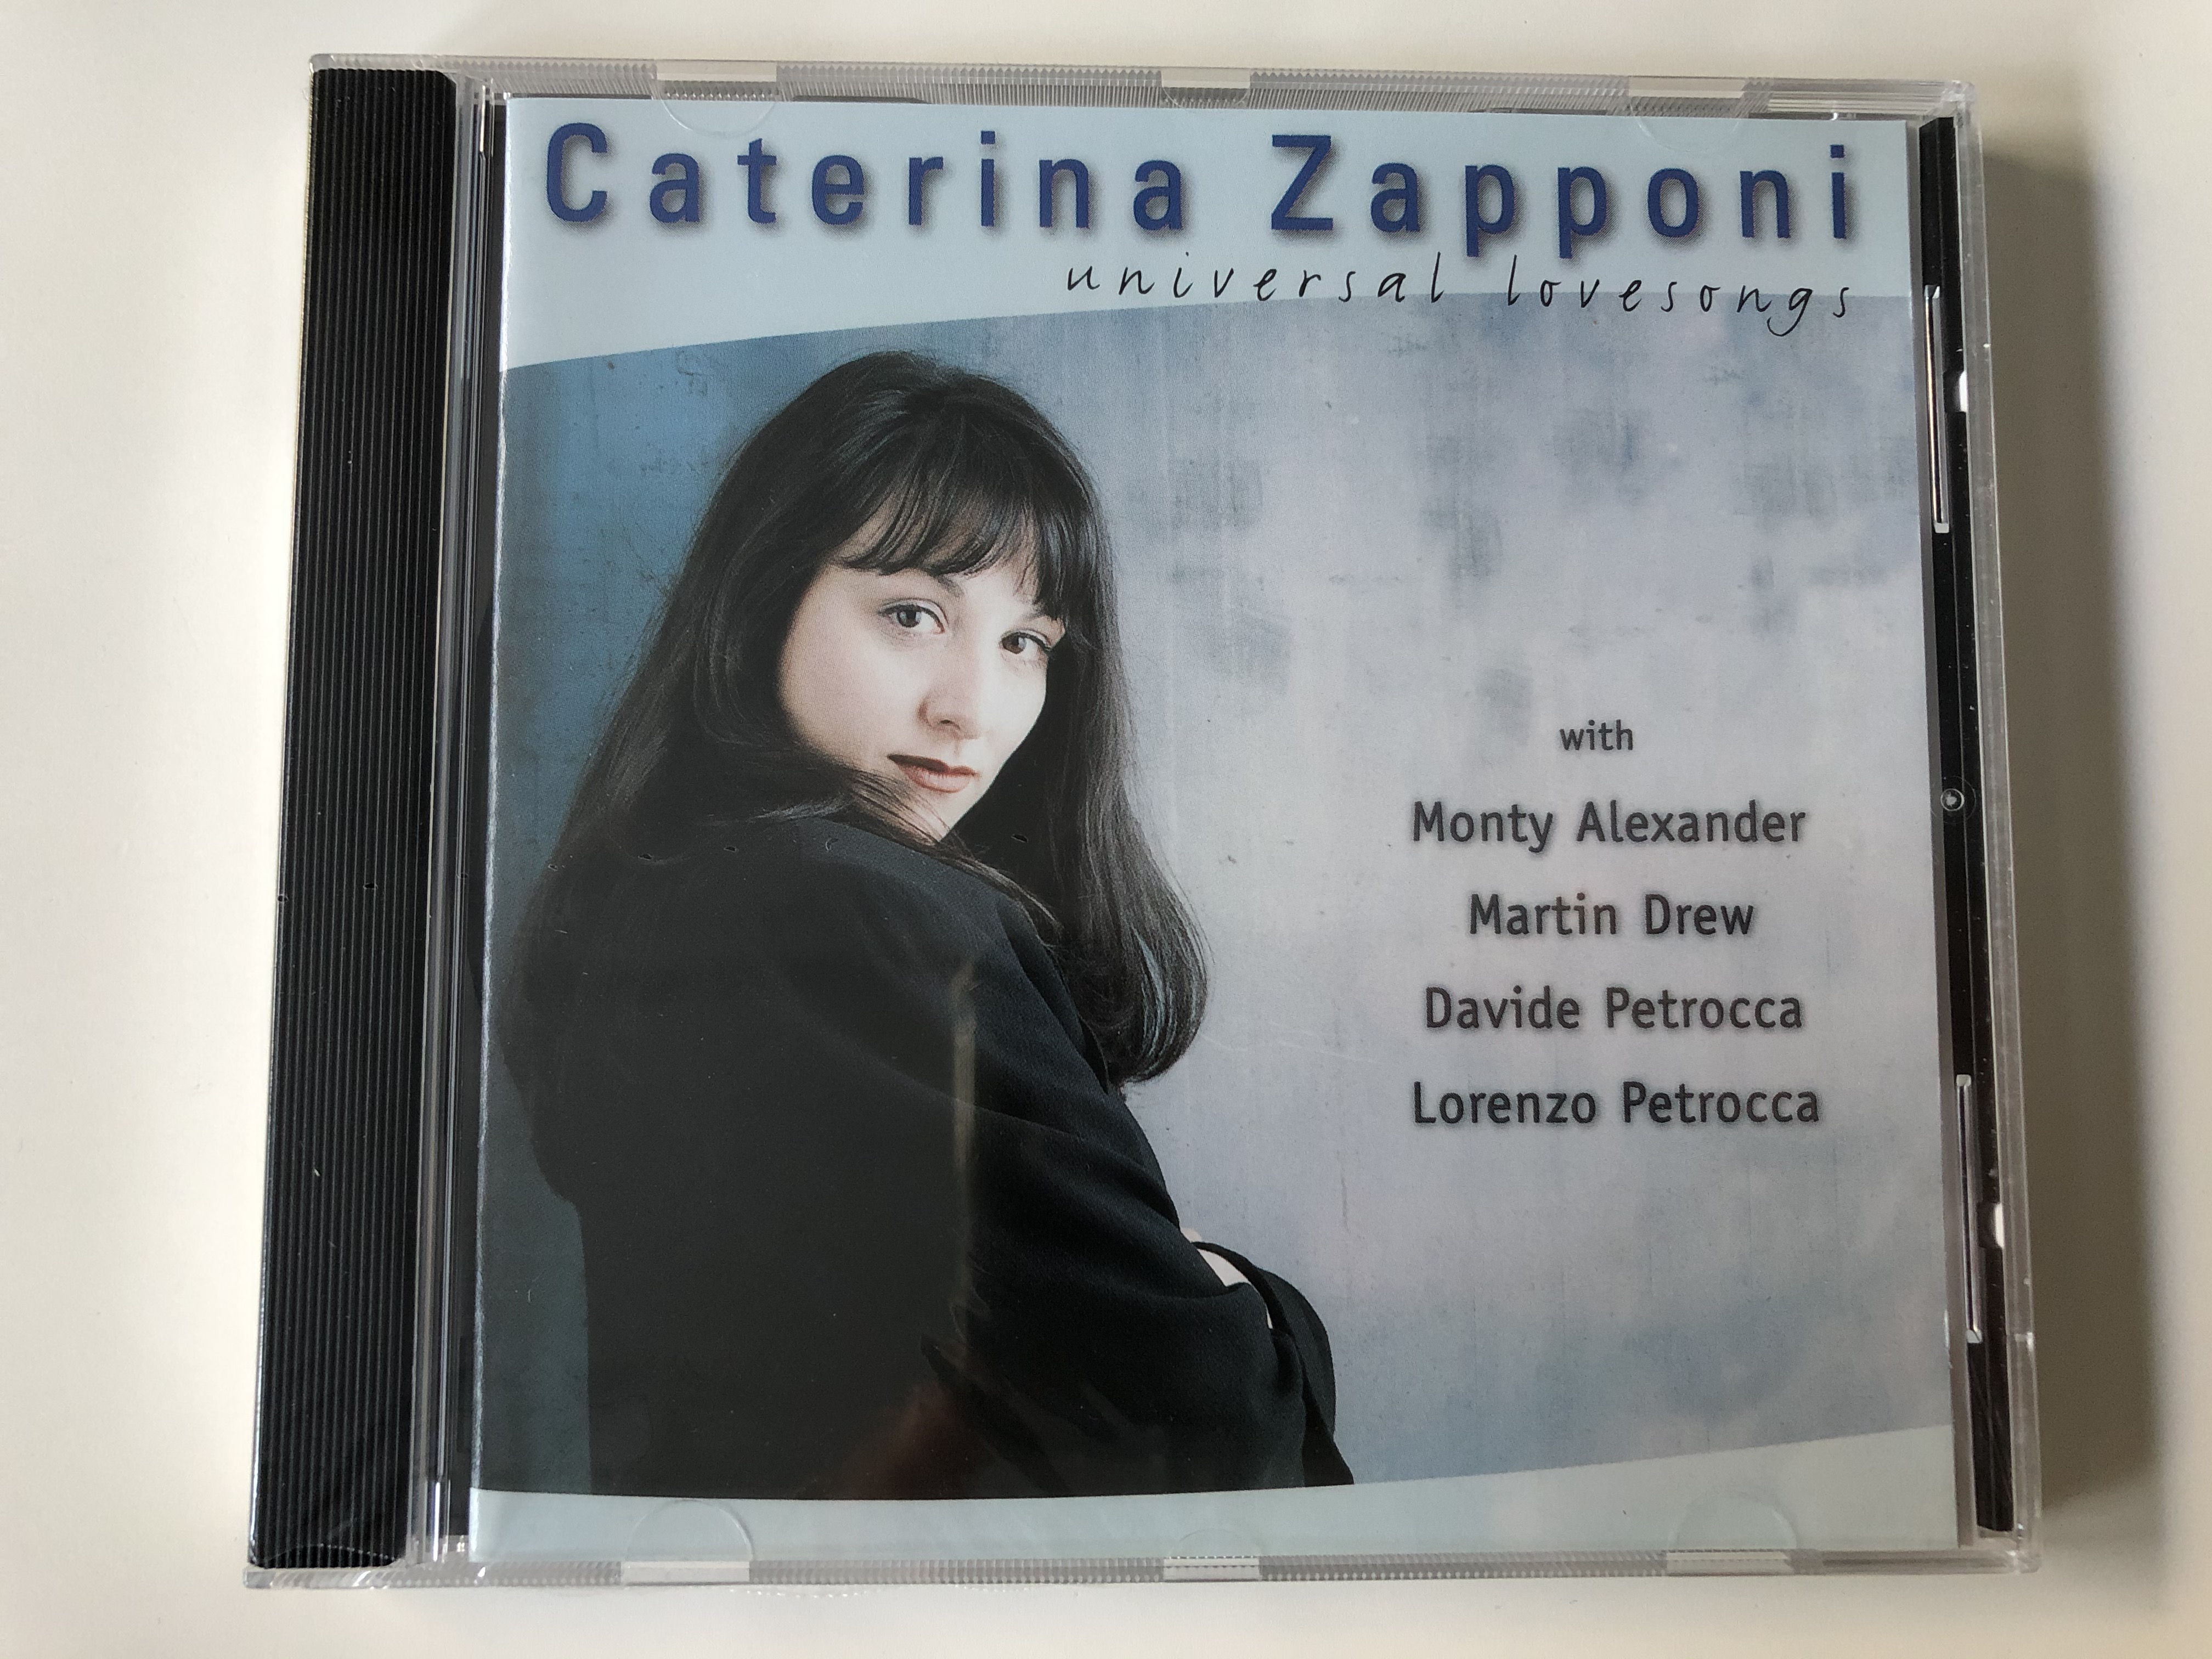 caterina-zapponi-universal-love-songs-with-monty-alexander-martin-drew-davide-petrocca-lorenzo-petrocca-inak-audio-cd-2000-inak-9062-cd-1-.jpg